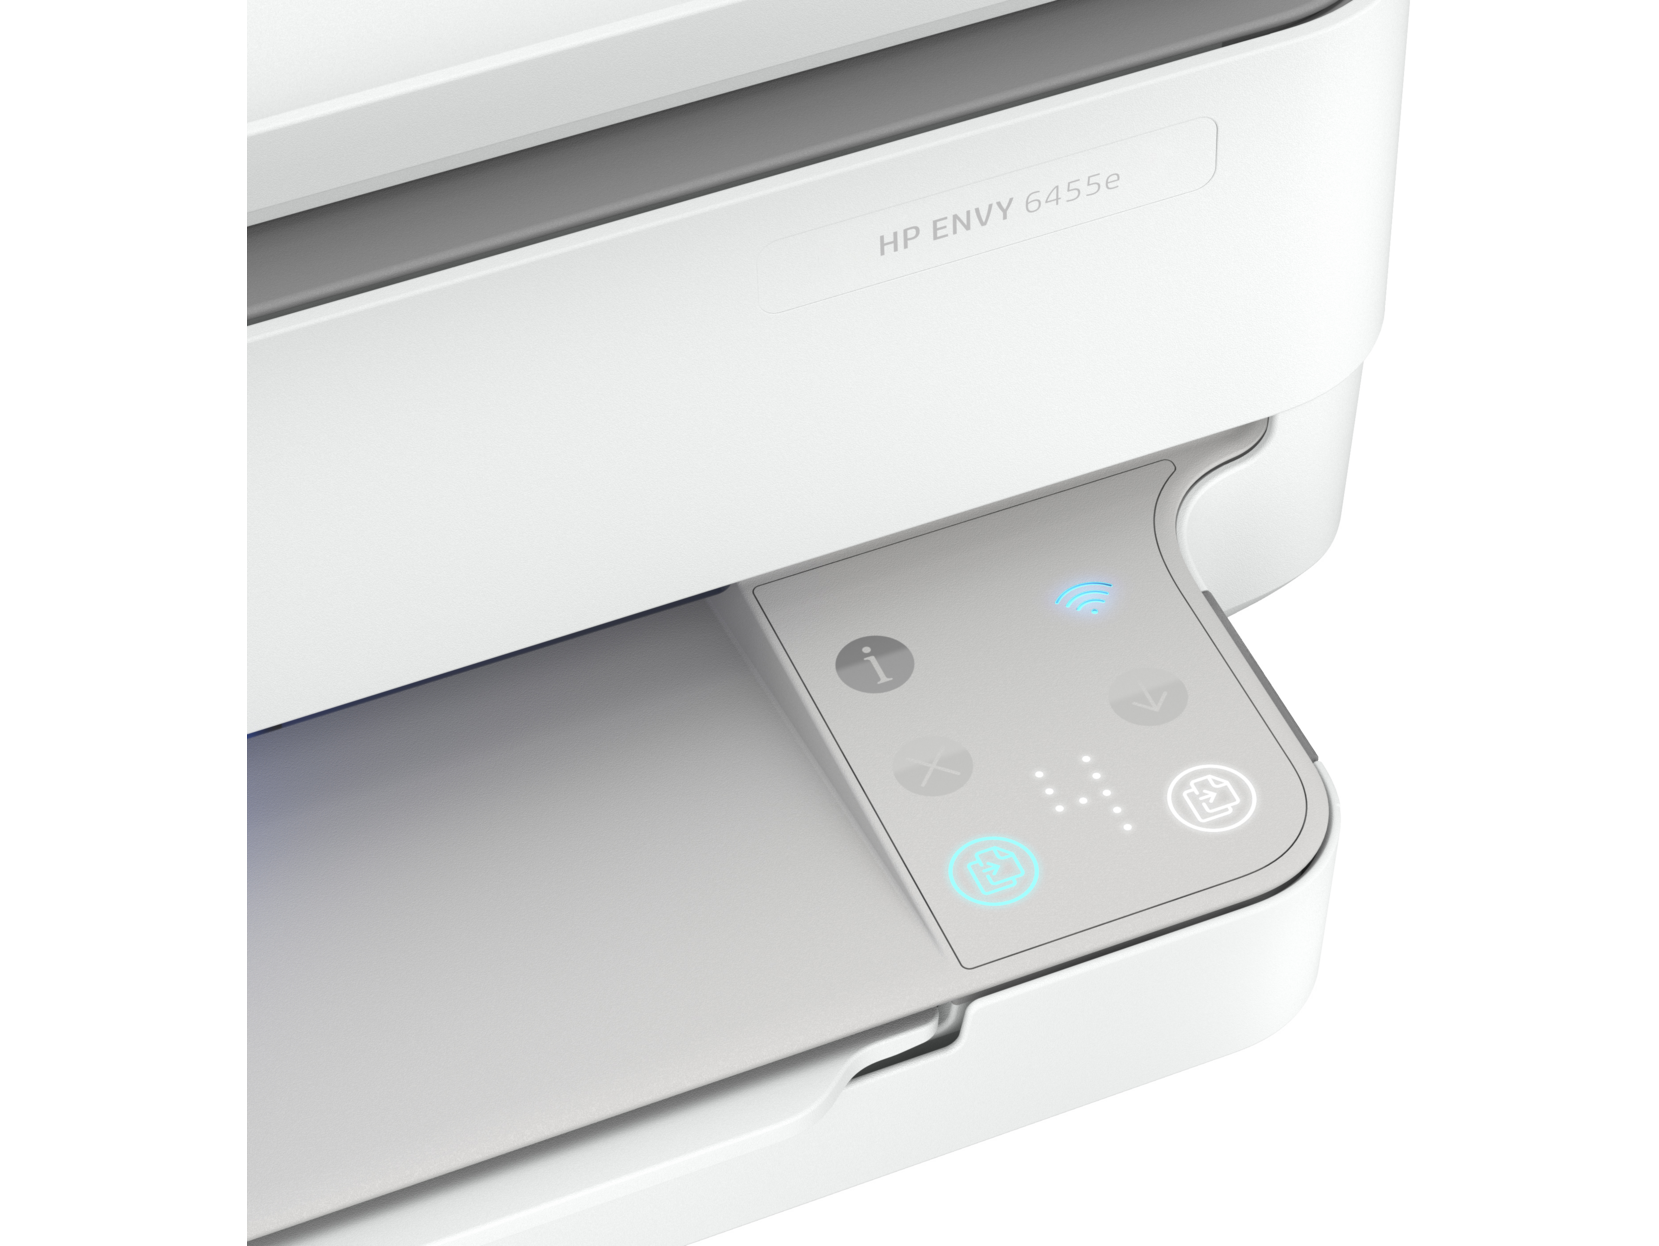 HP ENVY 6455e All-in-One Inkjet Printer, Color Mobile Print, Copy, Scan, Send - image 2 of 7